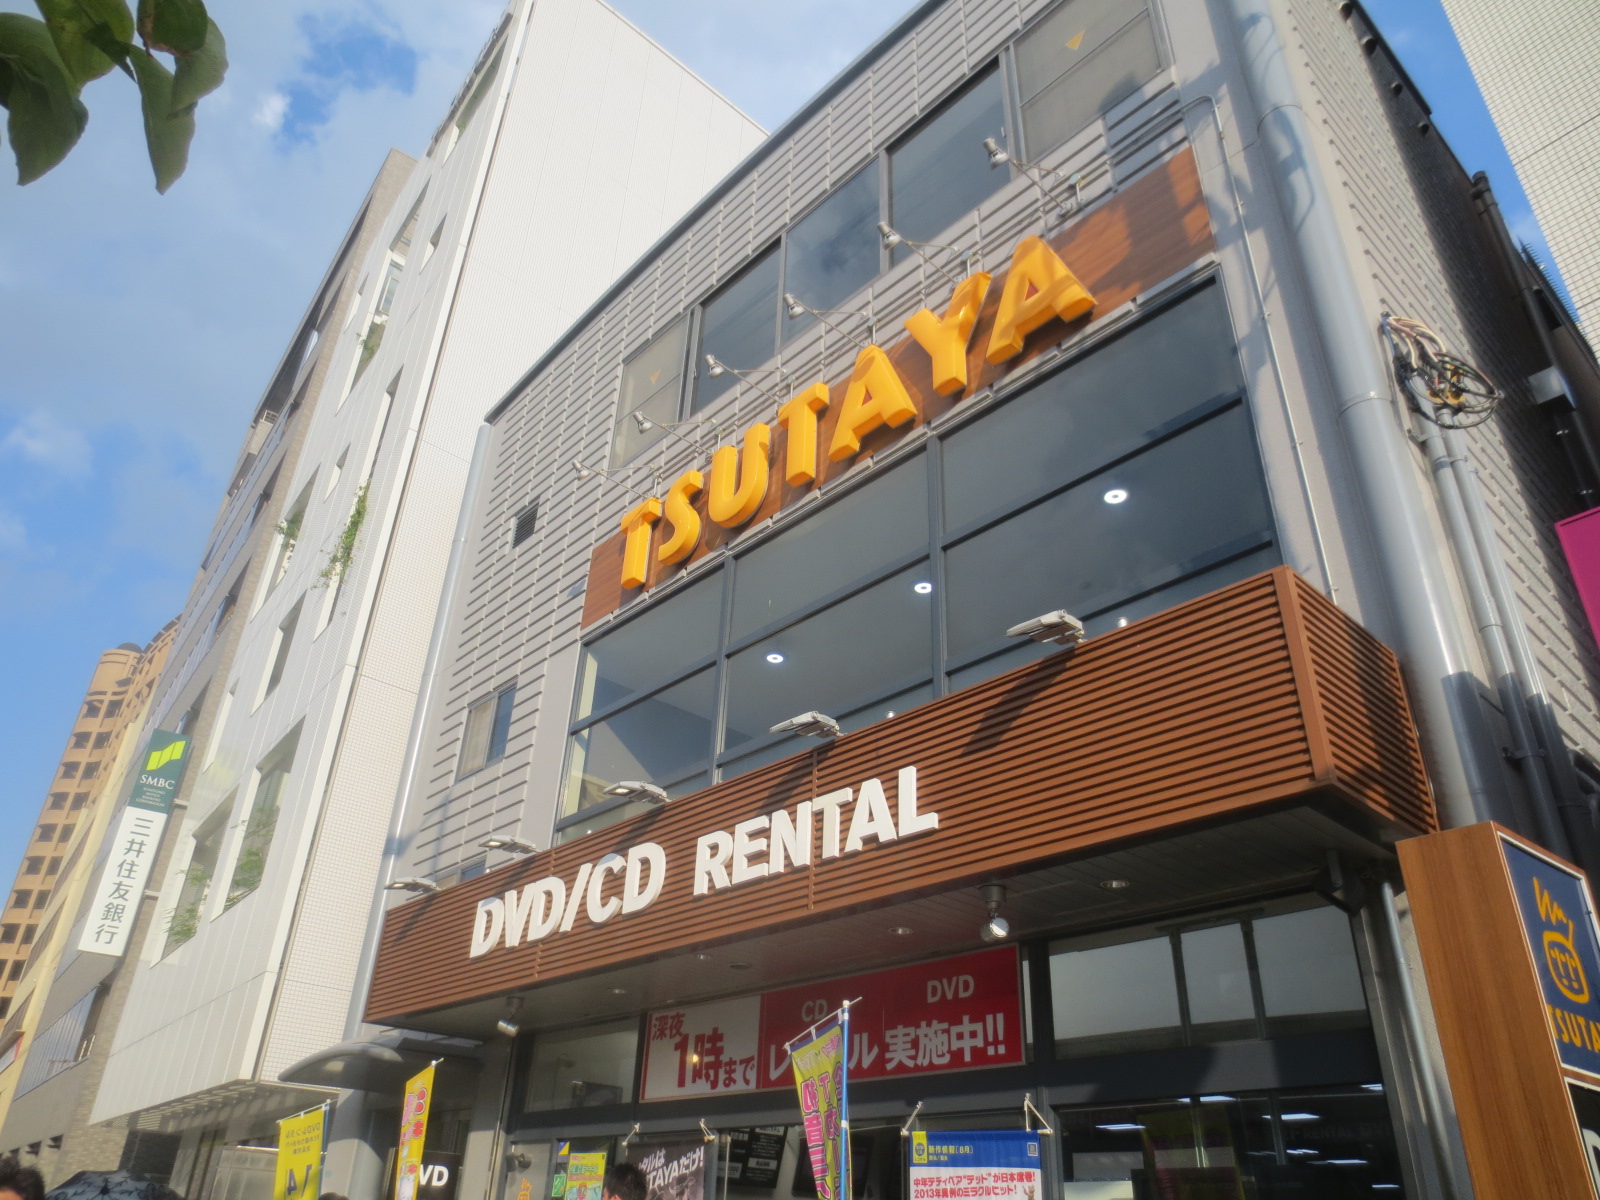 Rental video. TSUTAYA Okamoto shop 799m up (video rental)